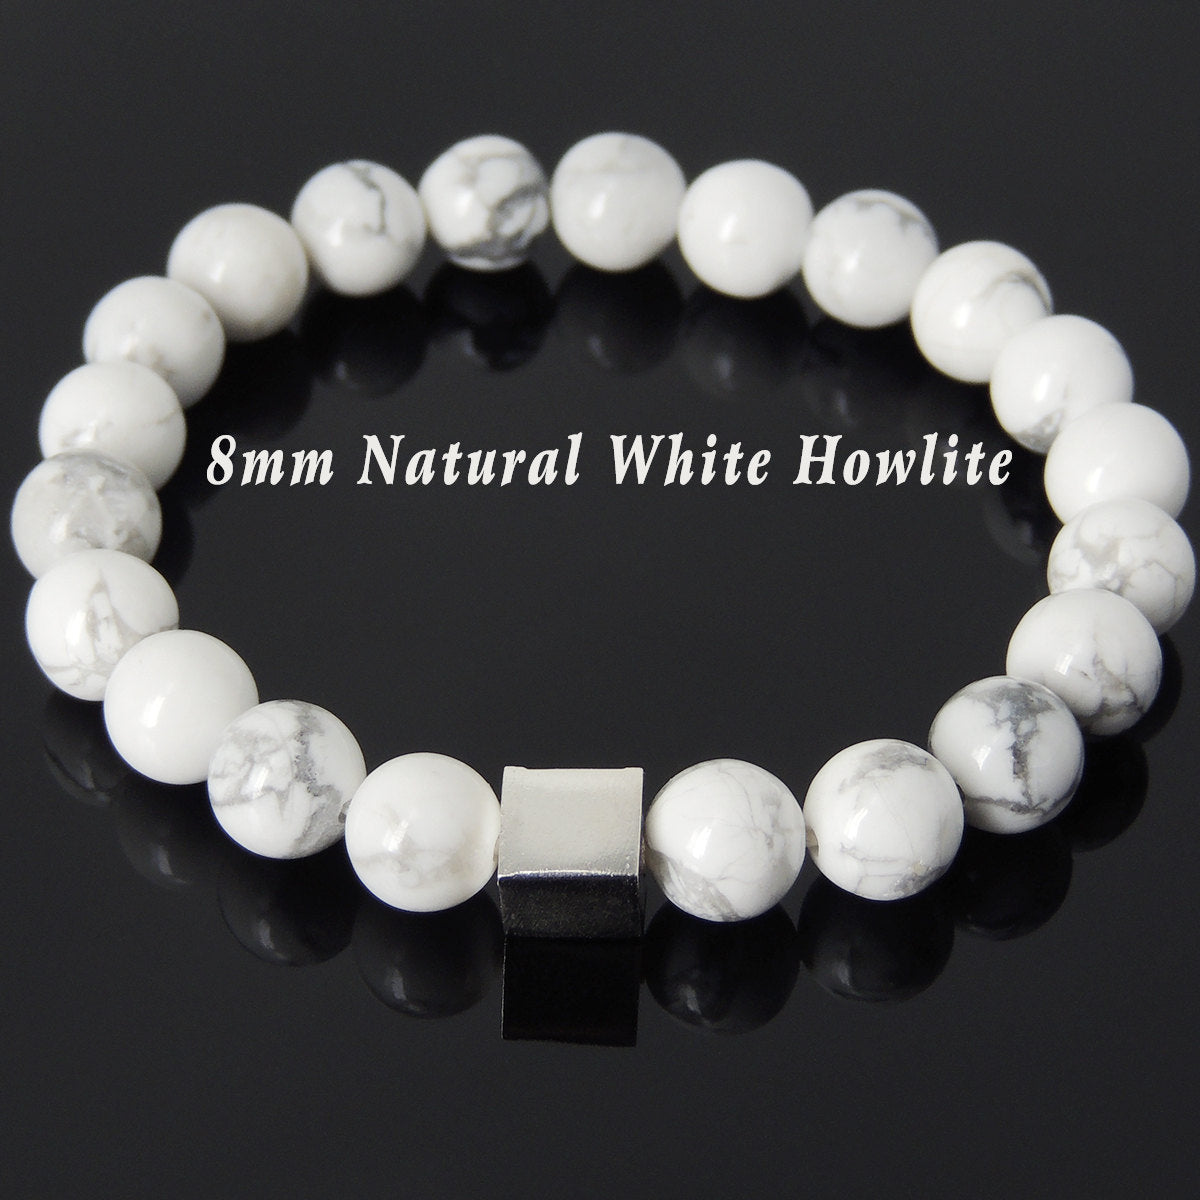 8mm White Howlite Healing Gemstone Bracelet with S925 Sterling Silver Geometric Cube Balance Bead - Handmade by Gem & Silver BR692